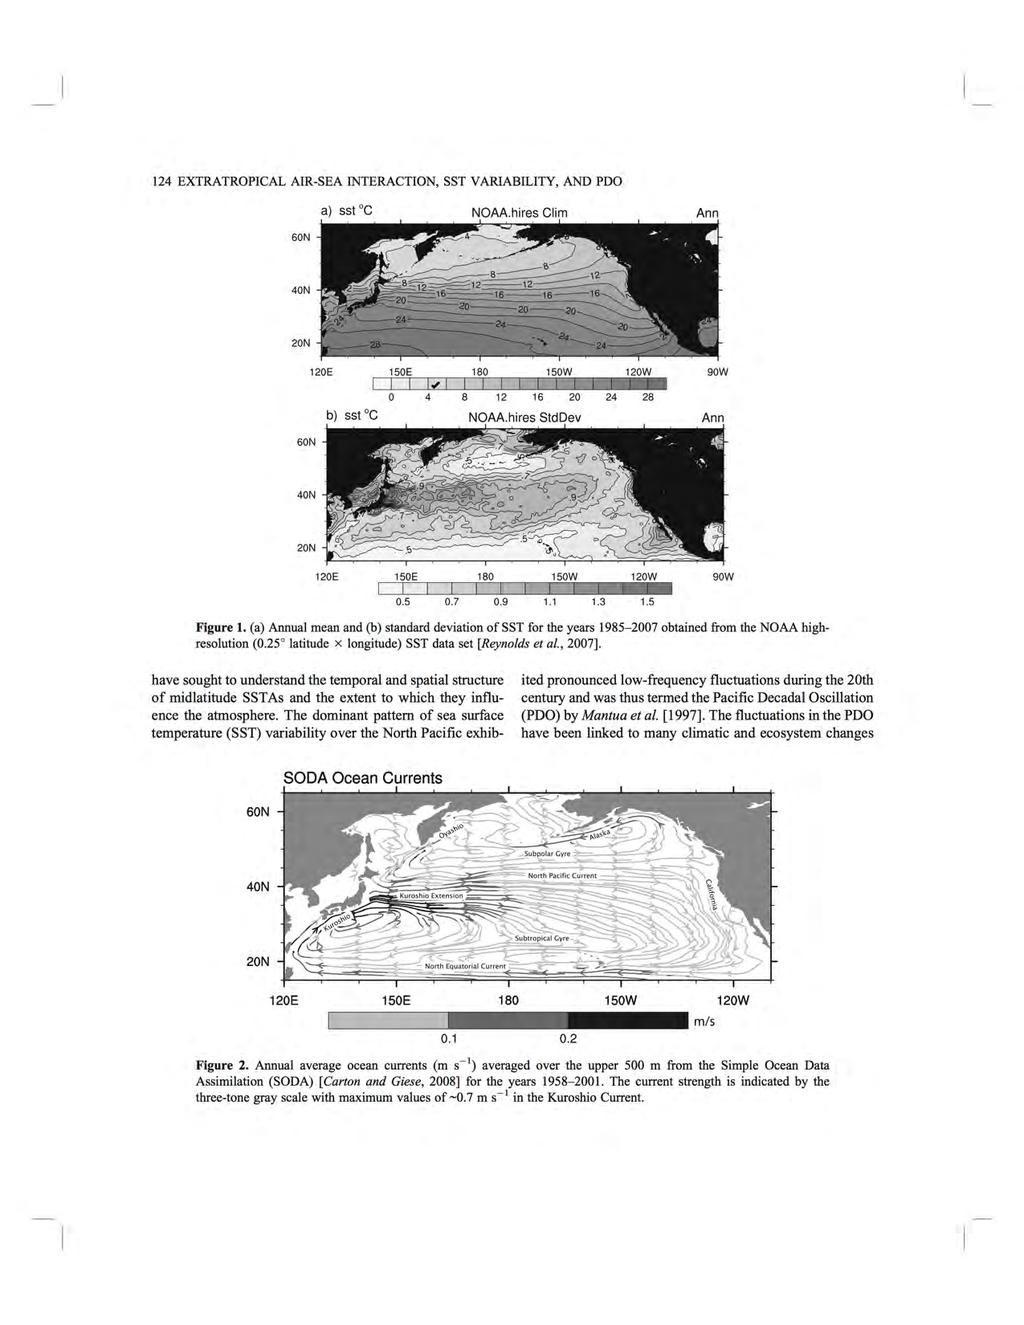 Pacific Ocean currents and variability Kuroshio-Oyashio Extension